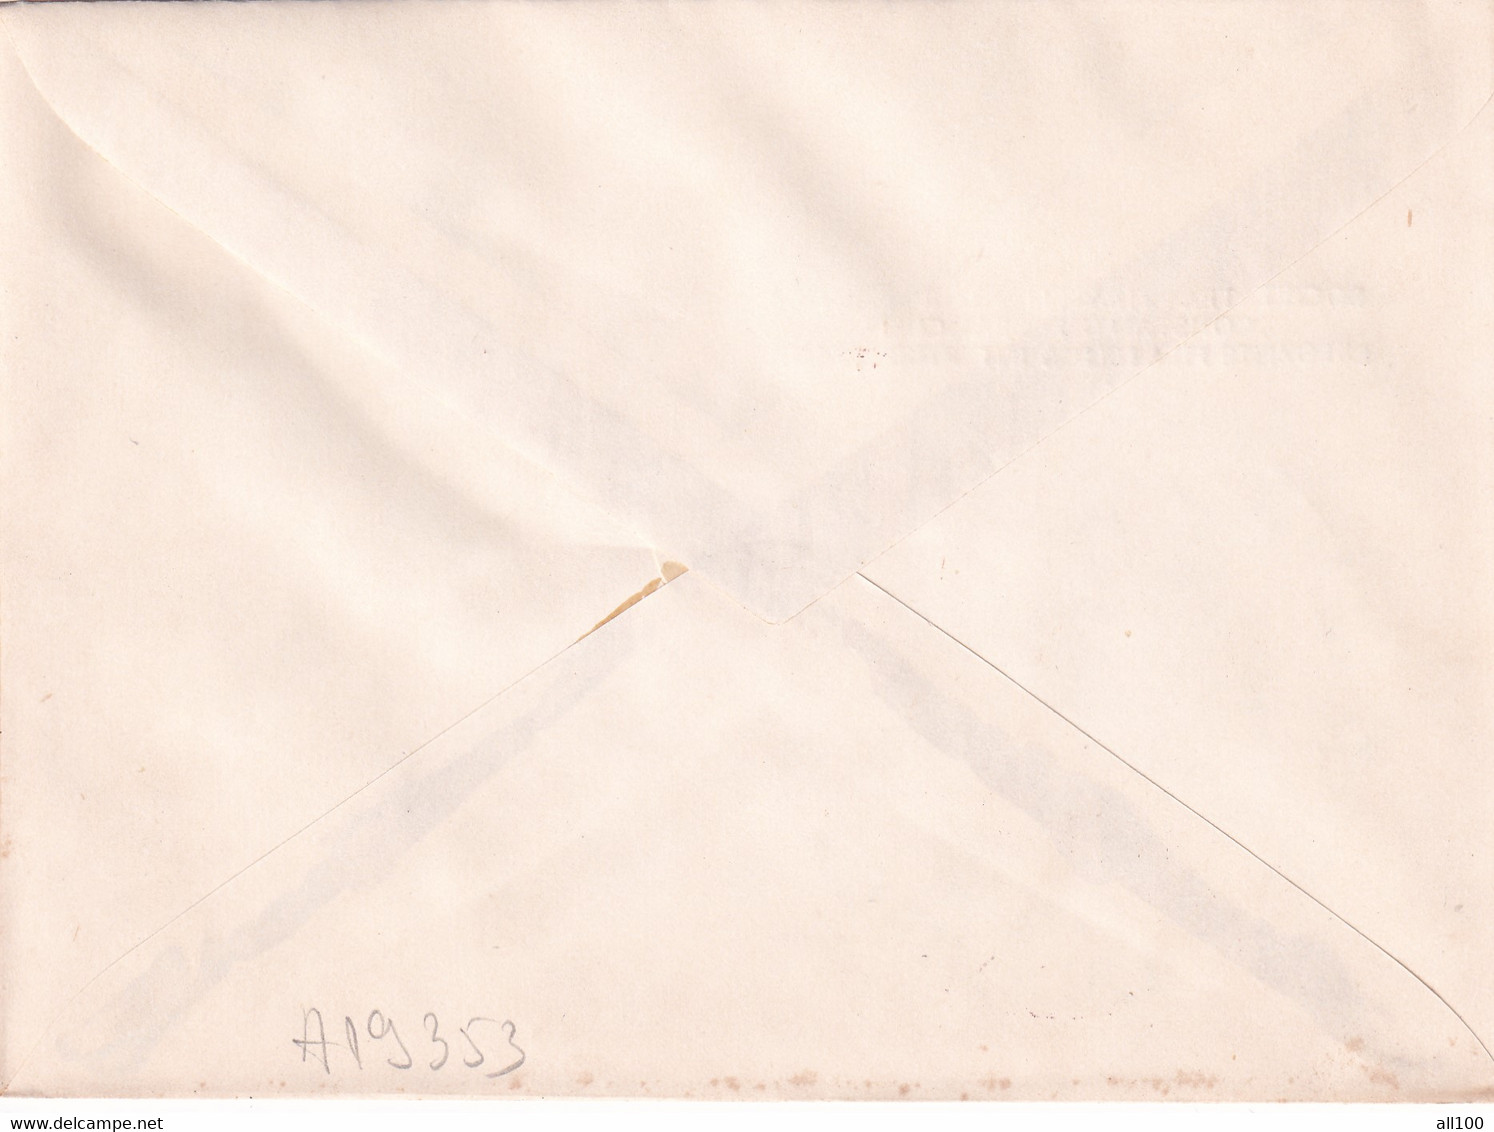 A19353 - CENTENARUL LICEULUI TUDOR VLADIMIRESCU TARGU JIU TIRGU-JIU COVER ENVELOPE UNUSED 1990 ROMANIA - Briefe U. Dokumente